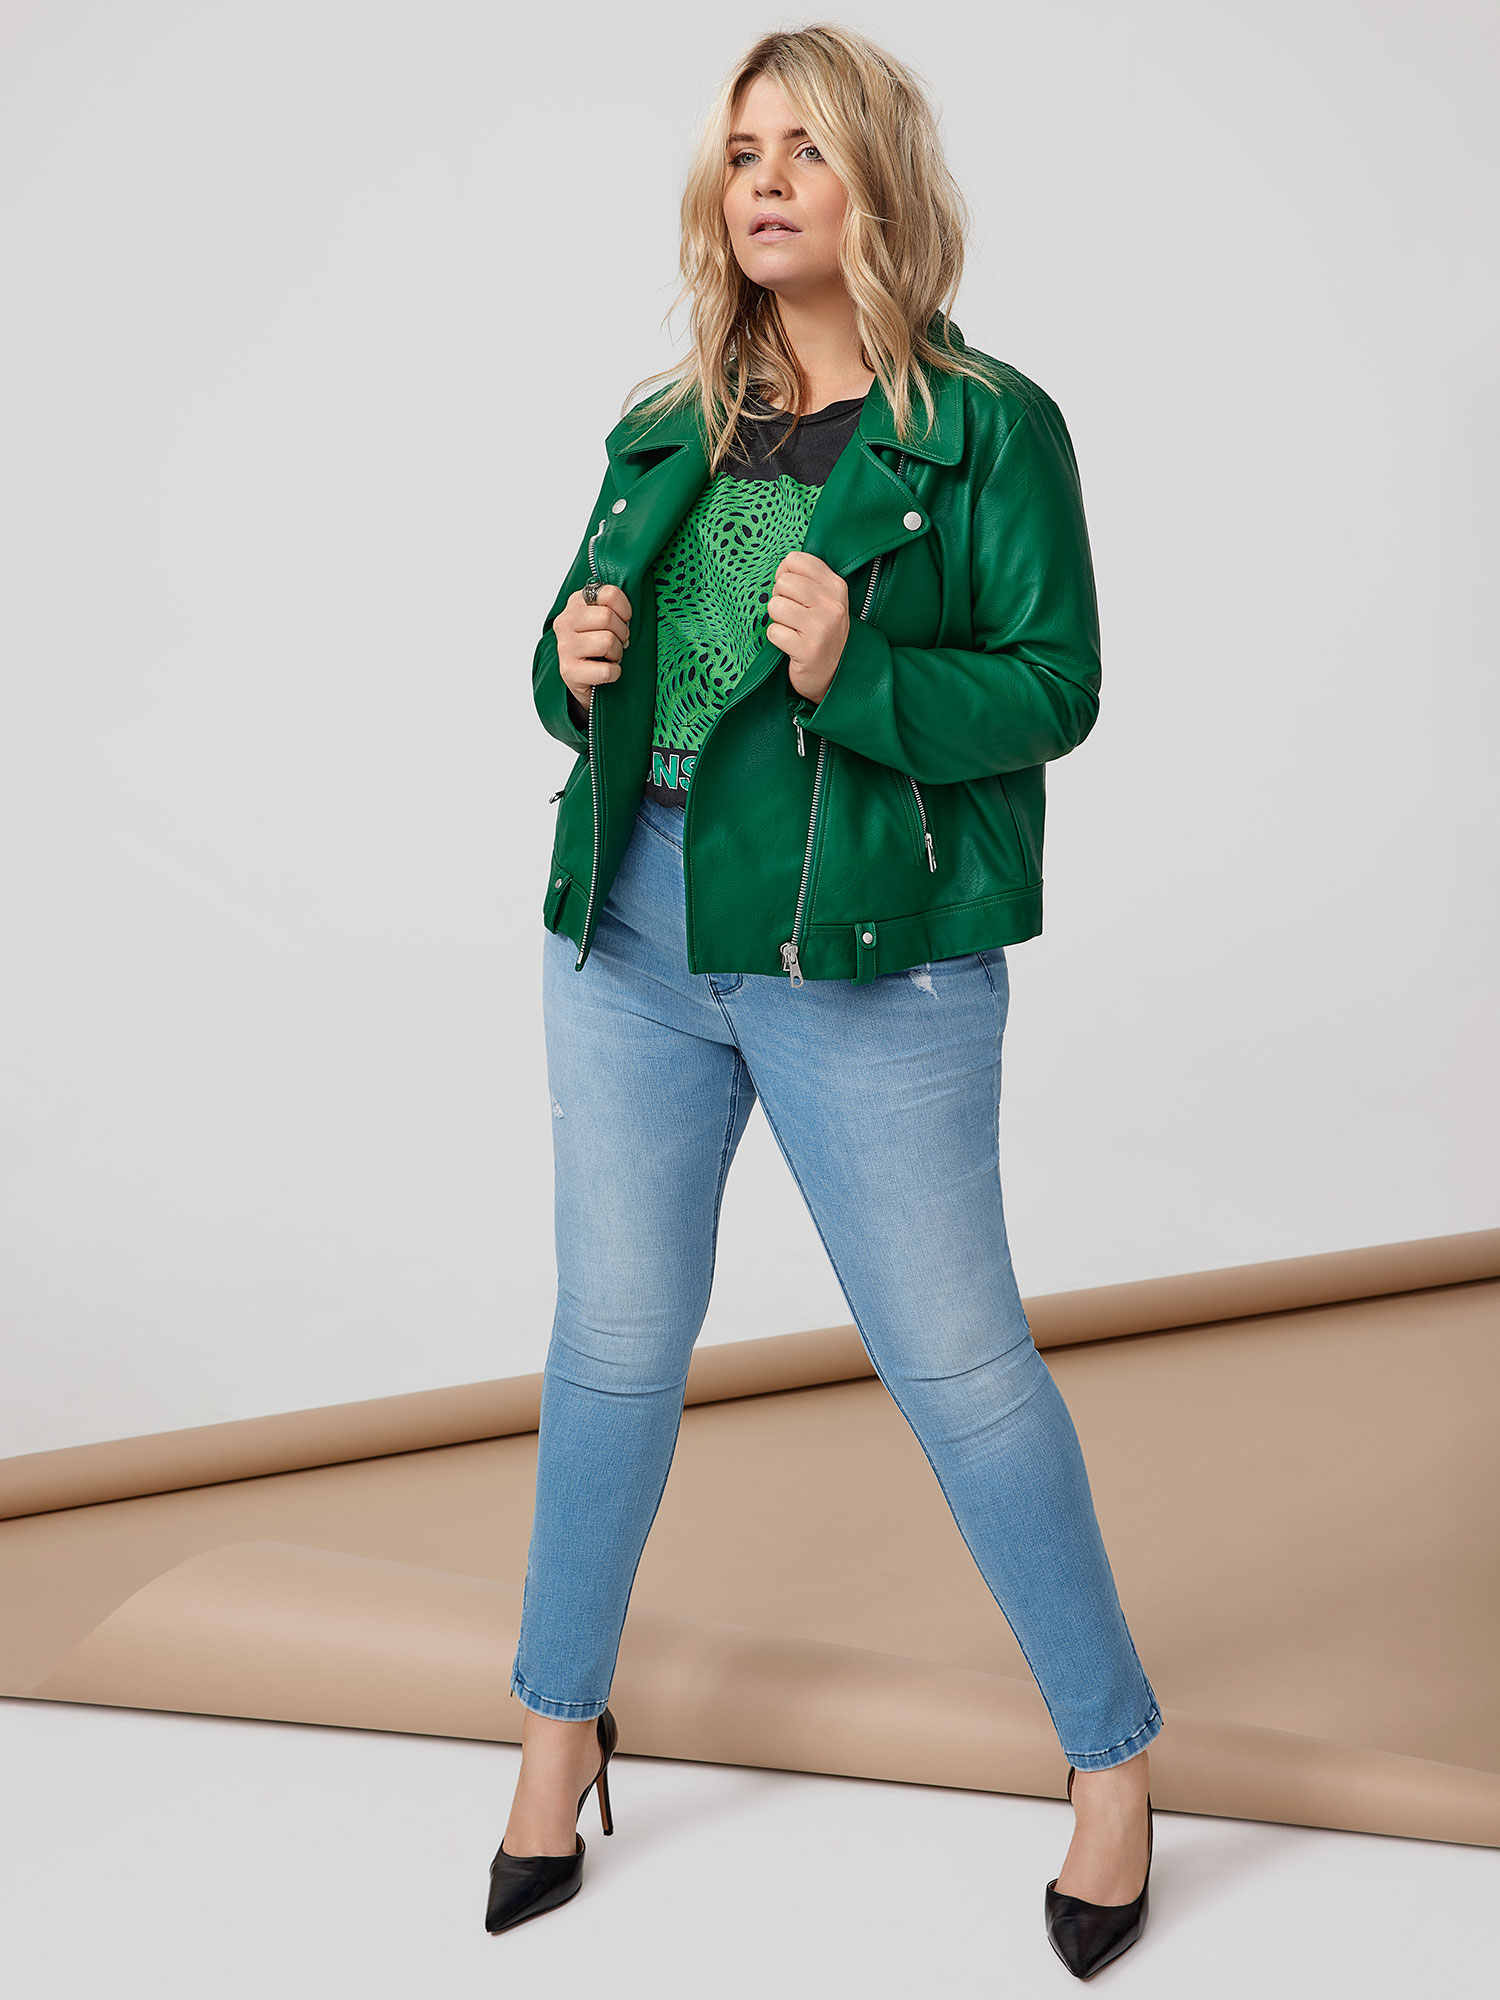 VERA - Kort grøn jakke i flot læder look fra Only Carmakoma